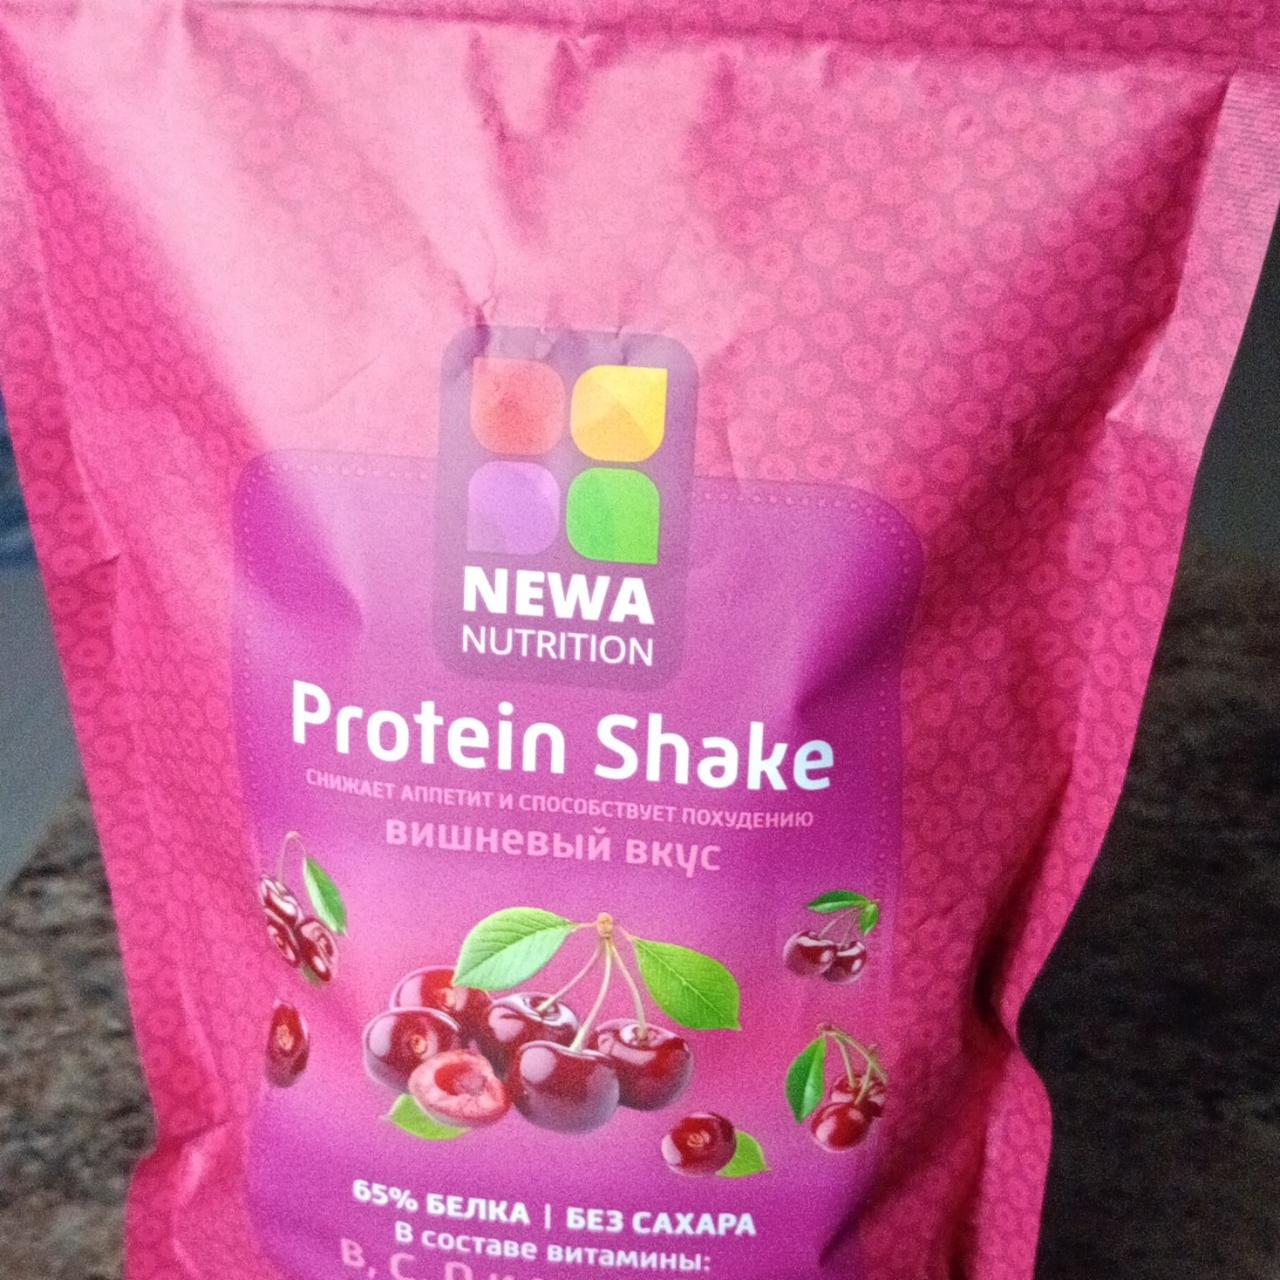 Фото - Протеиновый коктейль вмшневый вкус Protein shake Newa Nutrition